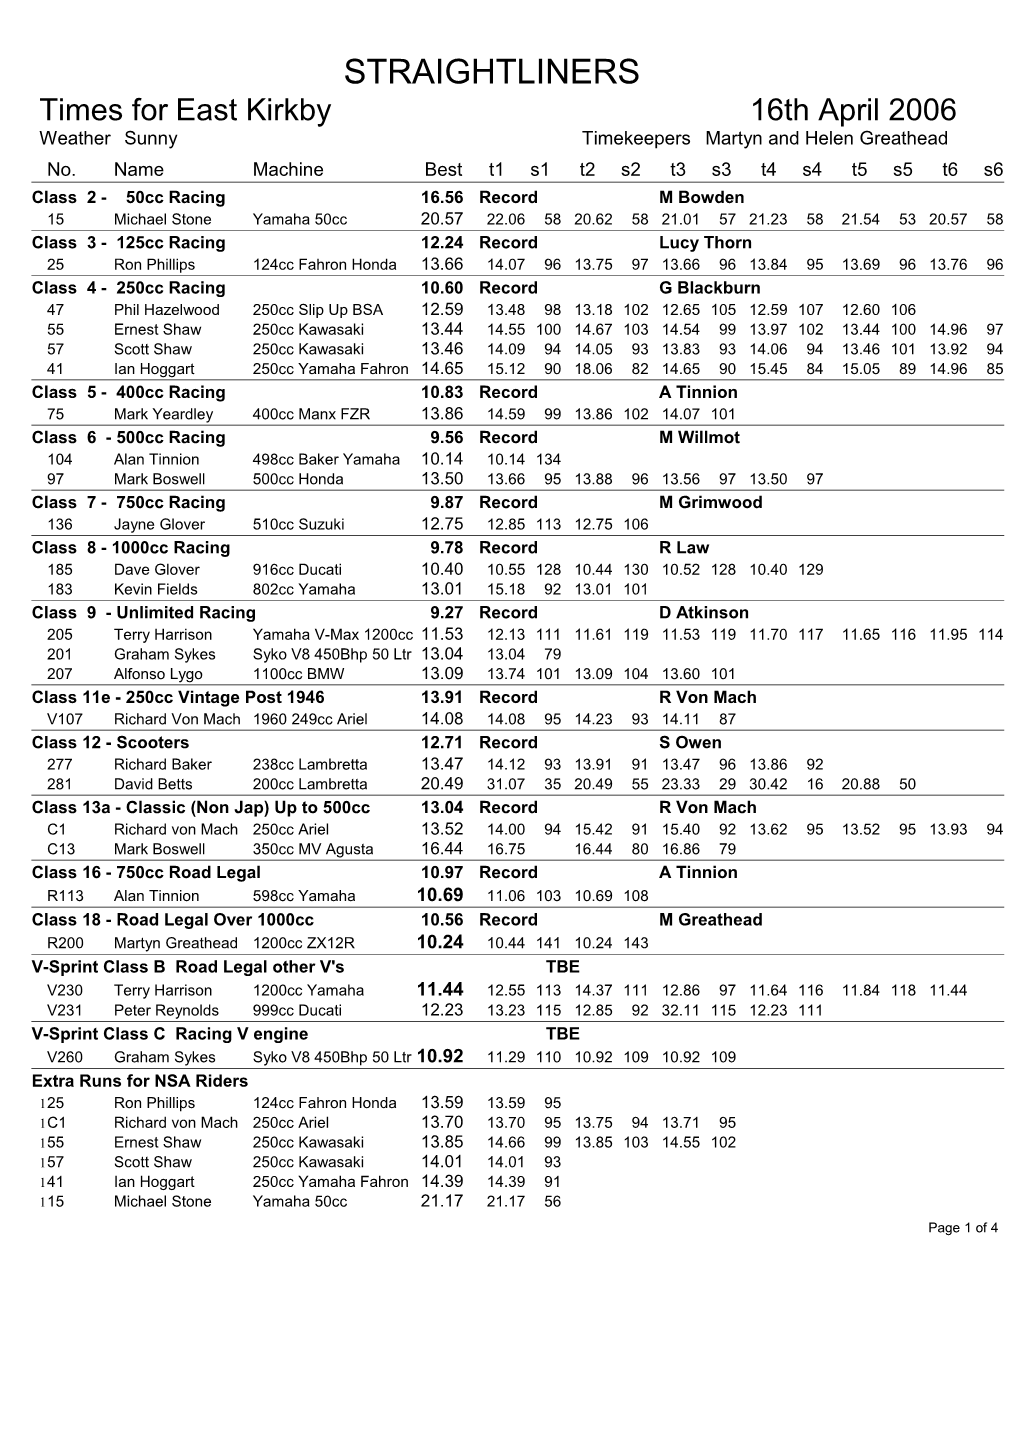 Class 2 - 50Cc Racing 16.56 Record M Bowden